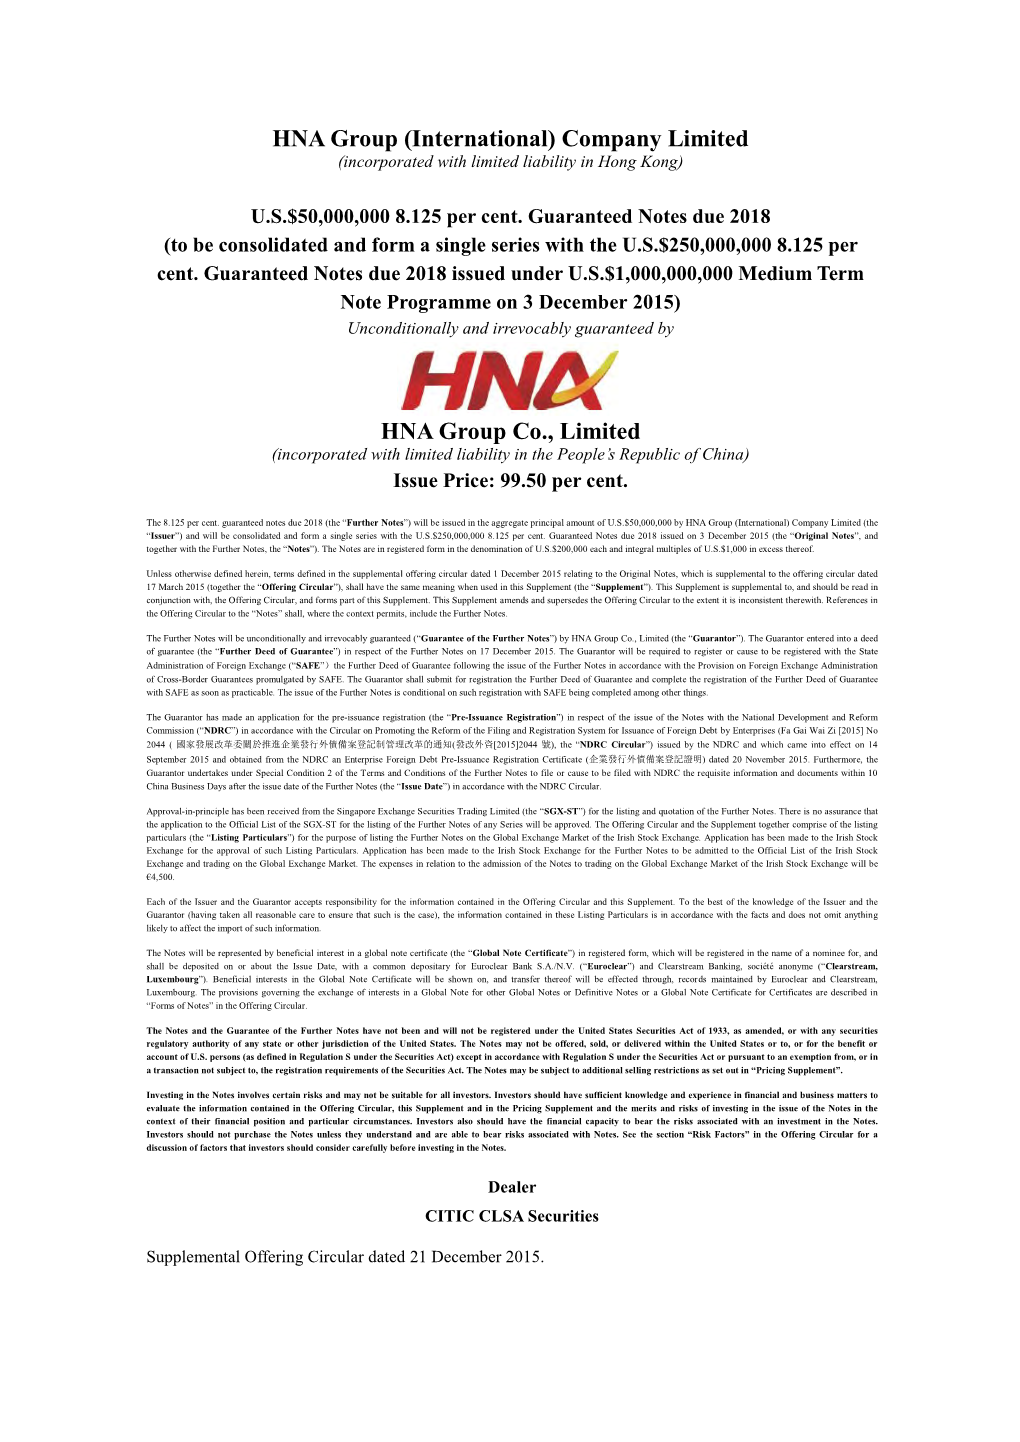 HNA Group (International) Company Limited HNA Group Co., Limited